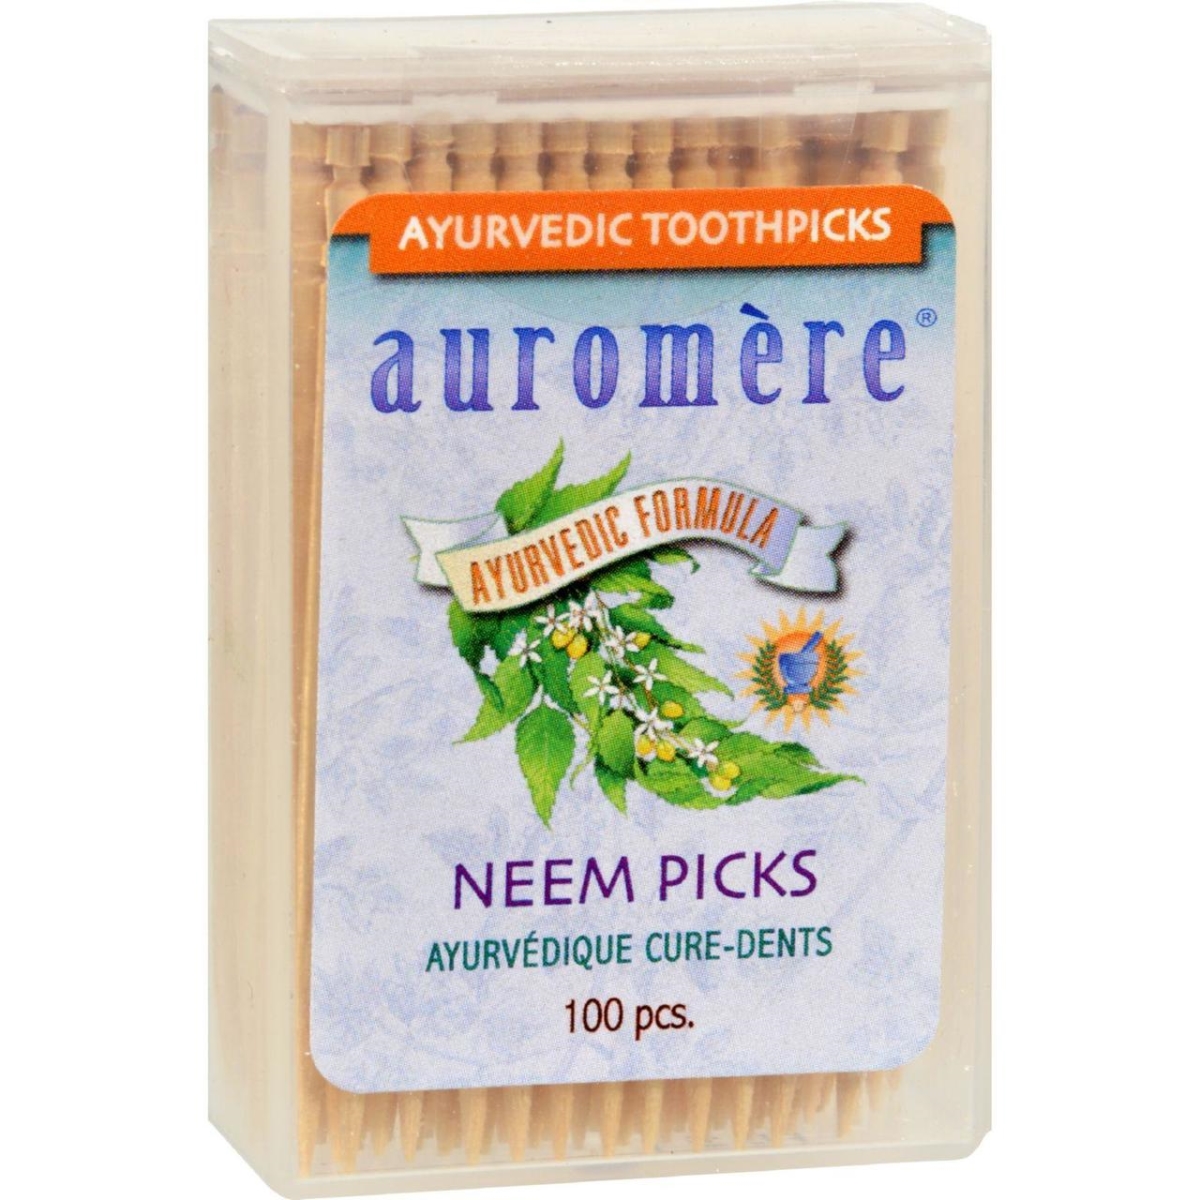 Hg1055441 Ayurvedic Neem Picks - 100 Toothpicks, Case Of 12